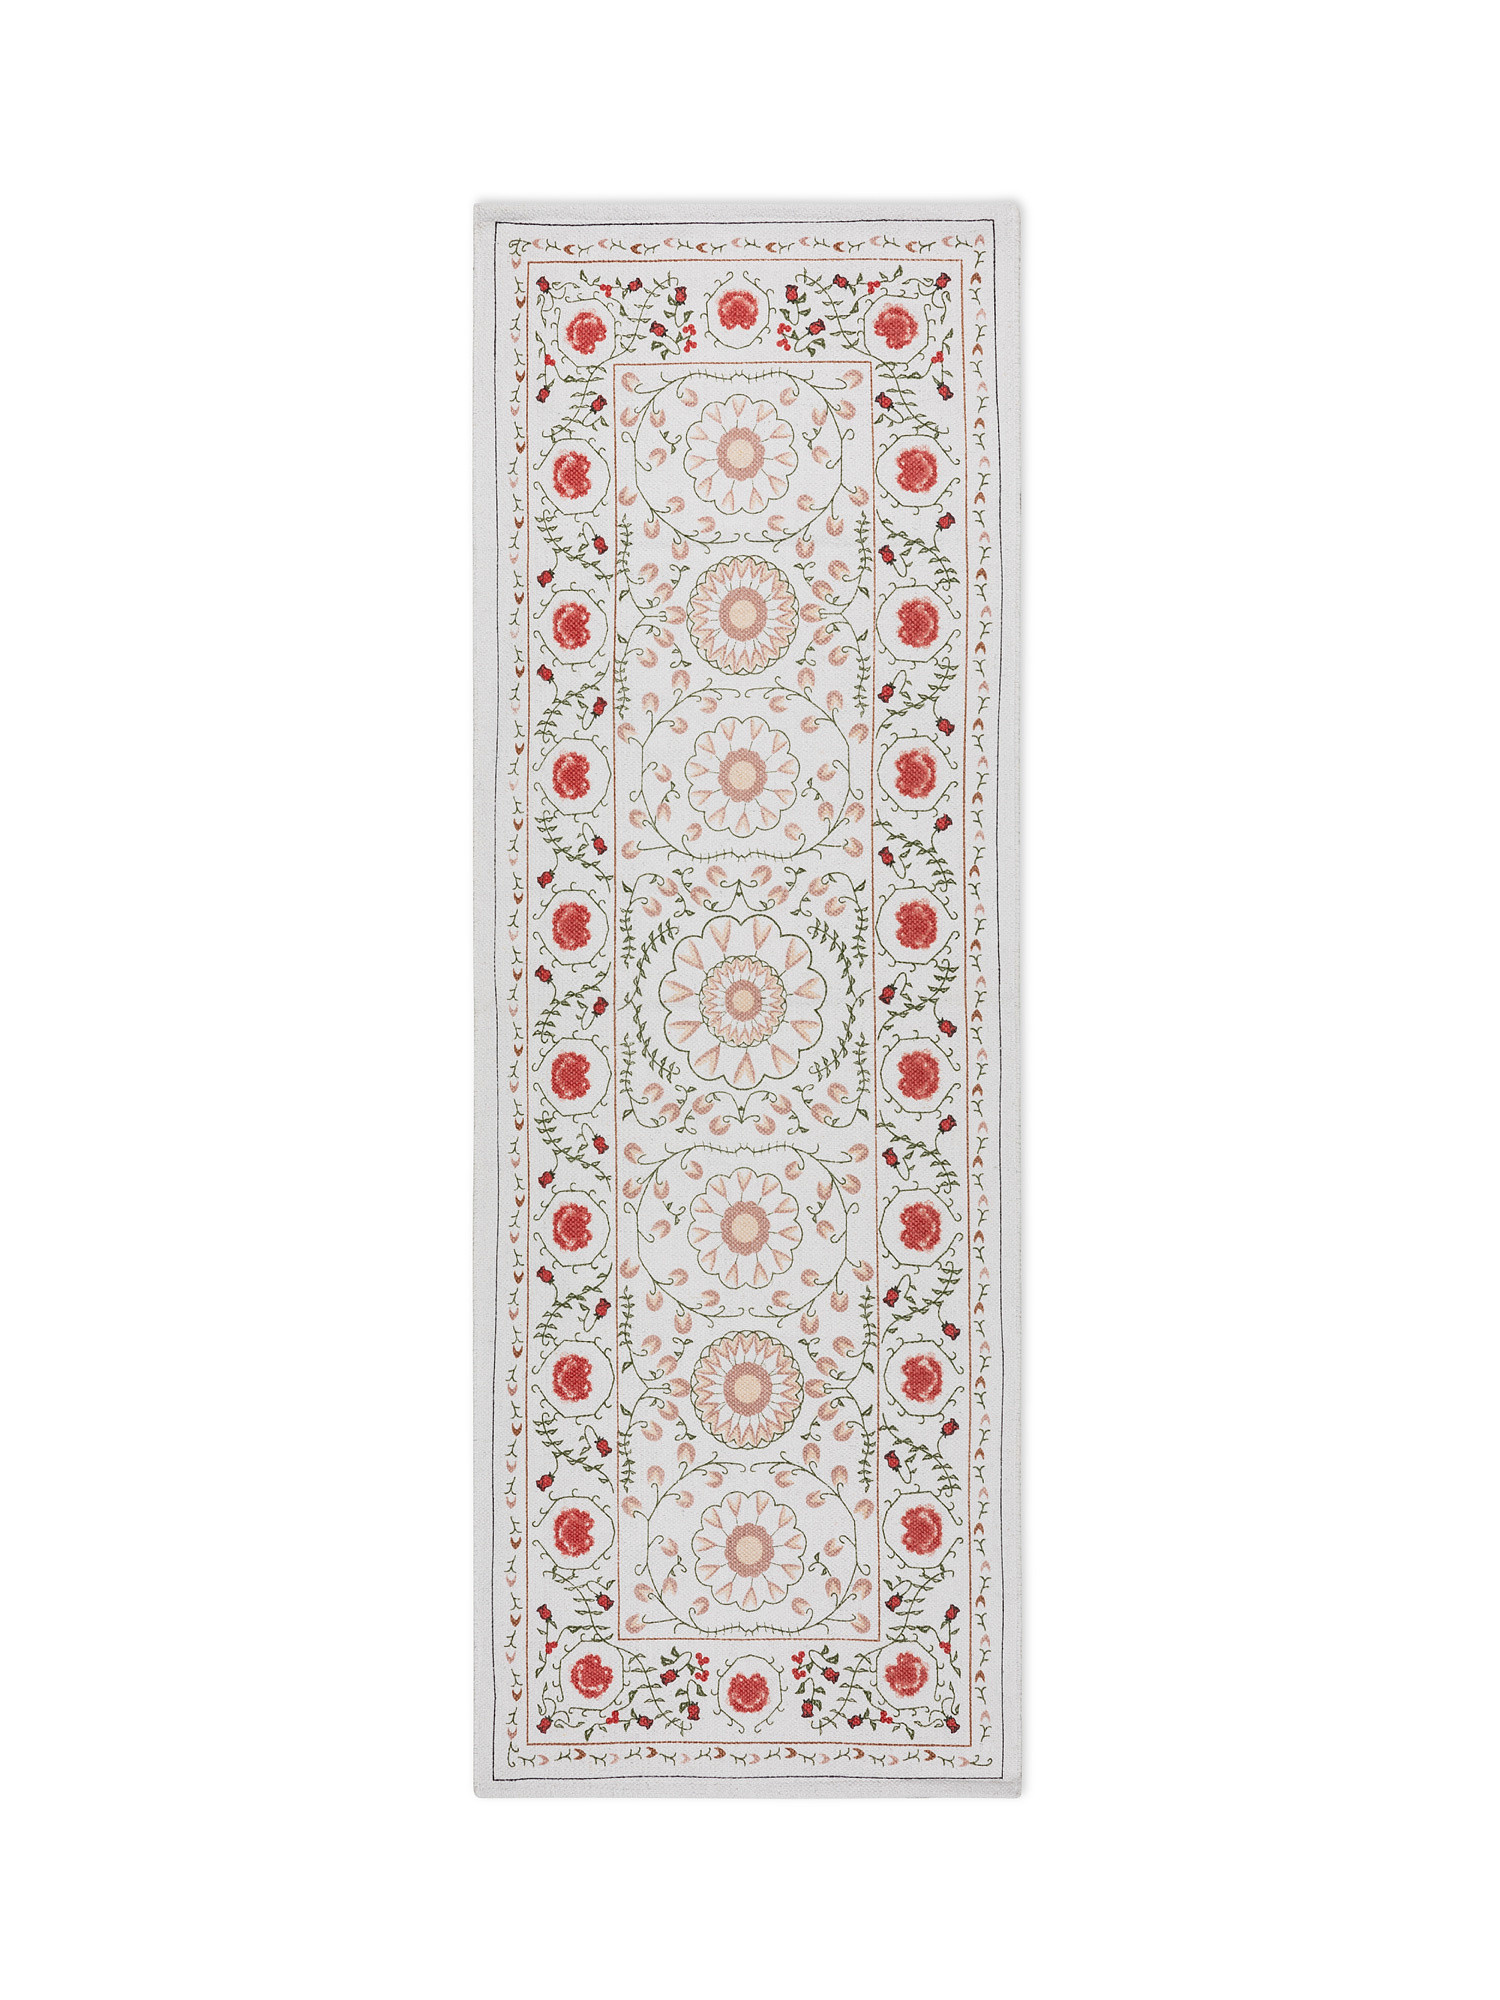 Tappeto da cucina misto cotone stampa floreale, Beige, large image number 0